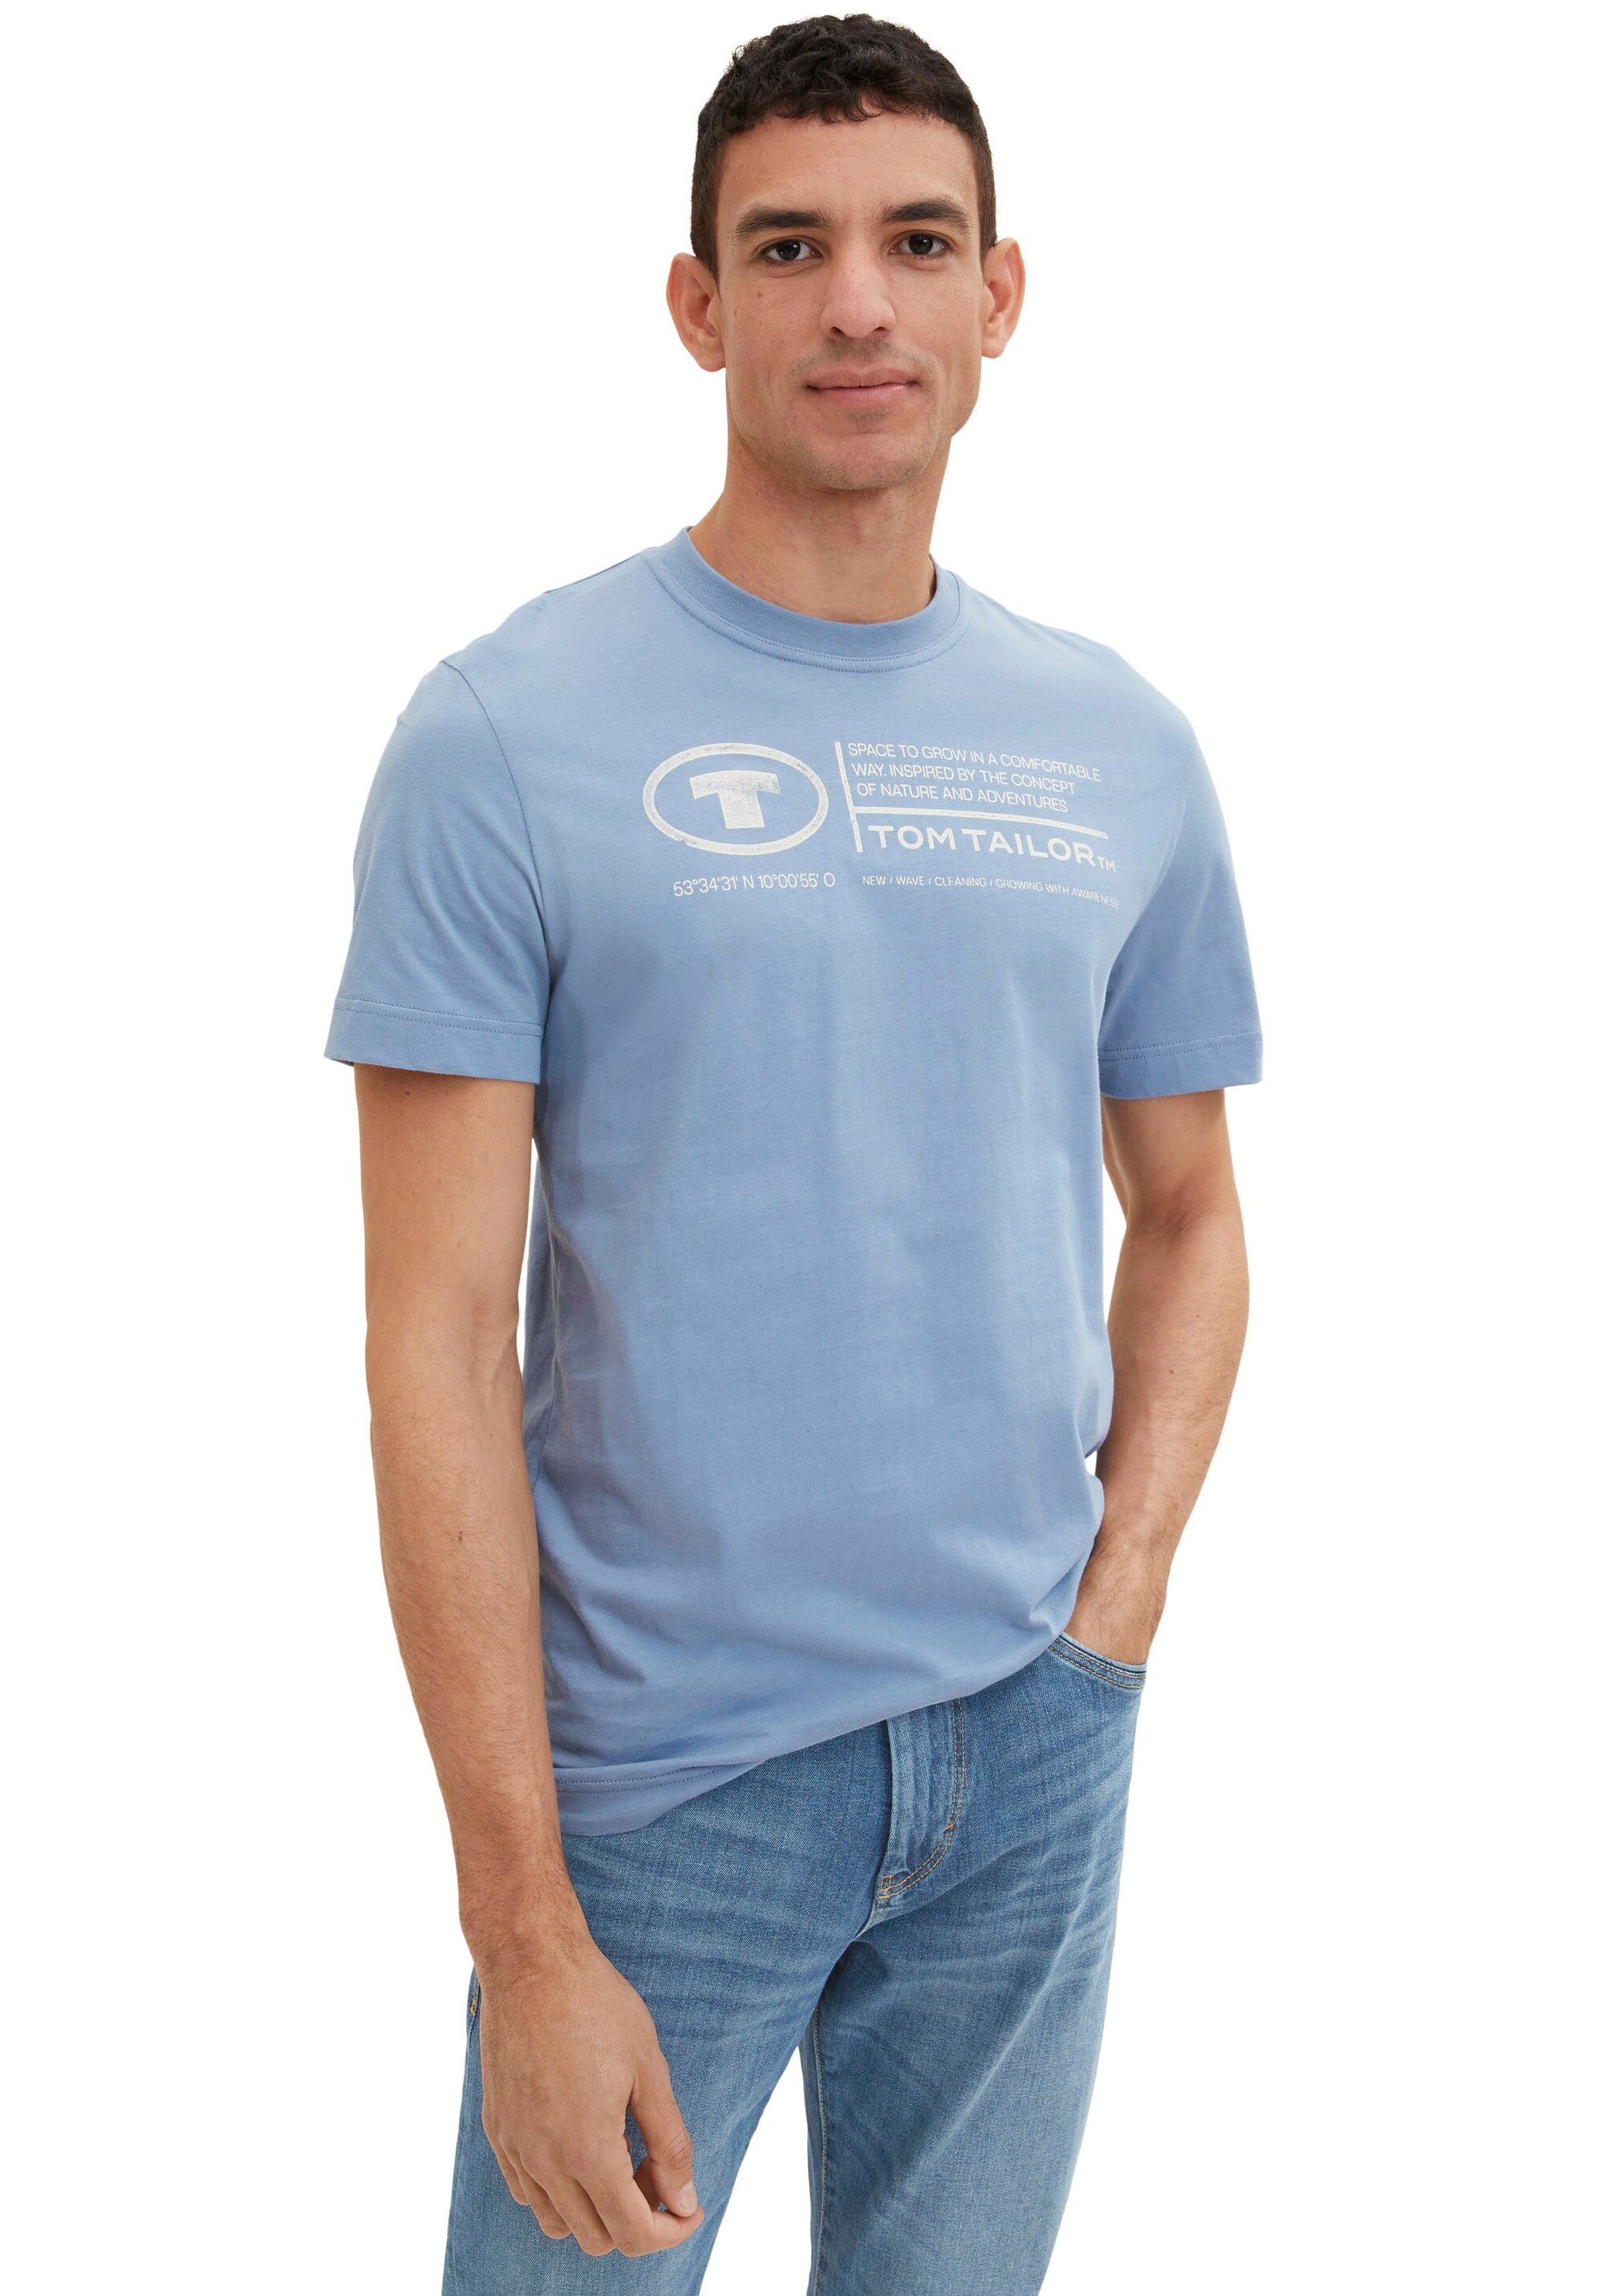 Herren Print-Shirt Mid Tom Frontprint Tailor TAILOR T-Shirt TOM Greyish Blue